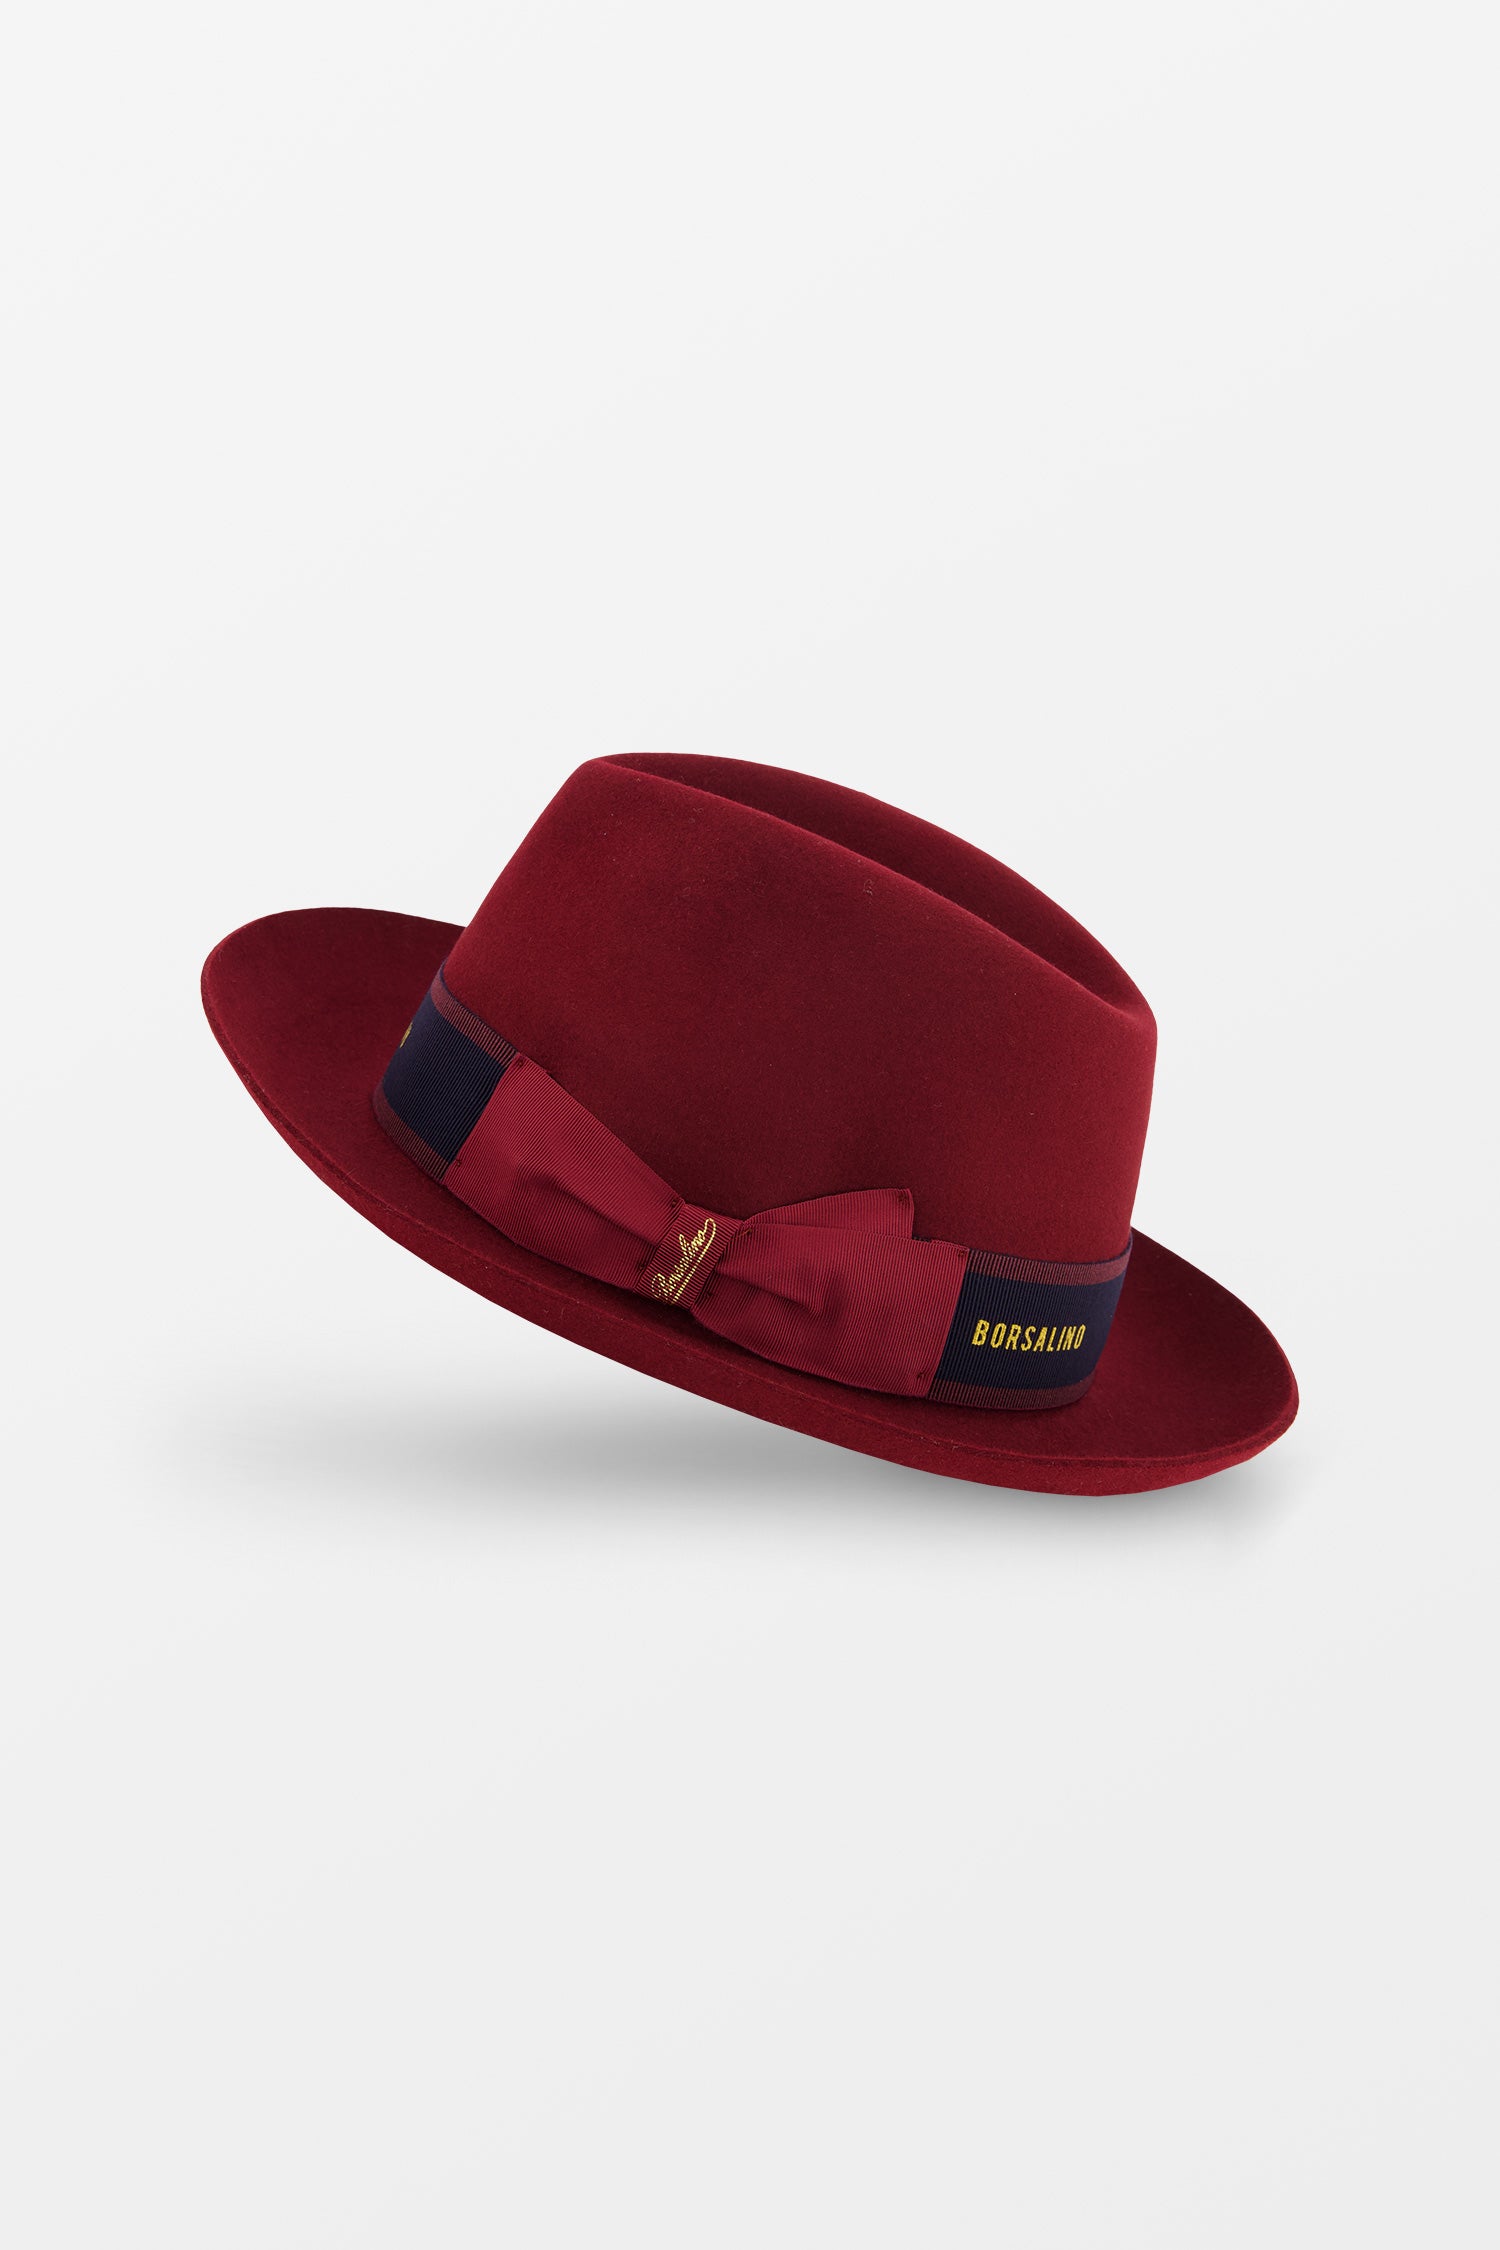 Shop Branded Luxury Hats From Top Designers | Original Luxury